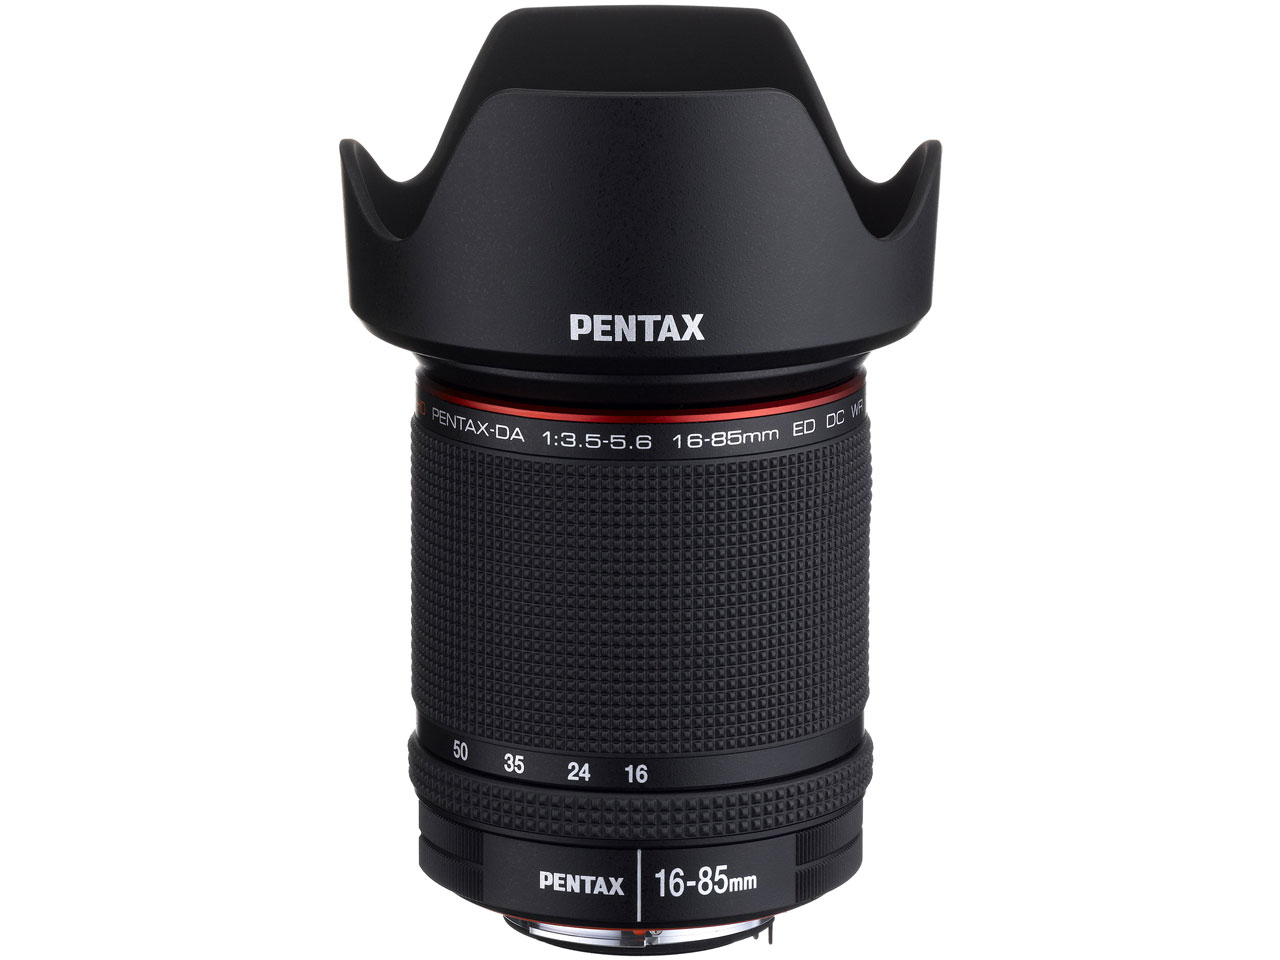 HD PENTAX-DA 16-85mmF3.5-5.6ED DC WR の製品画像